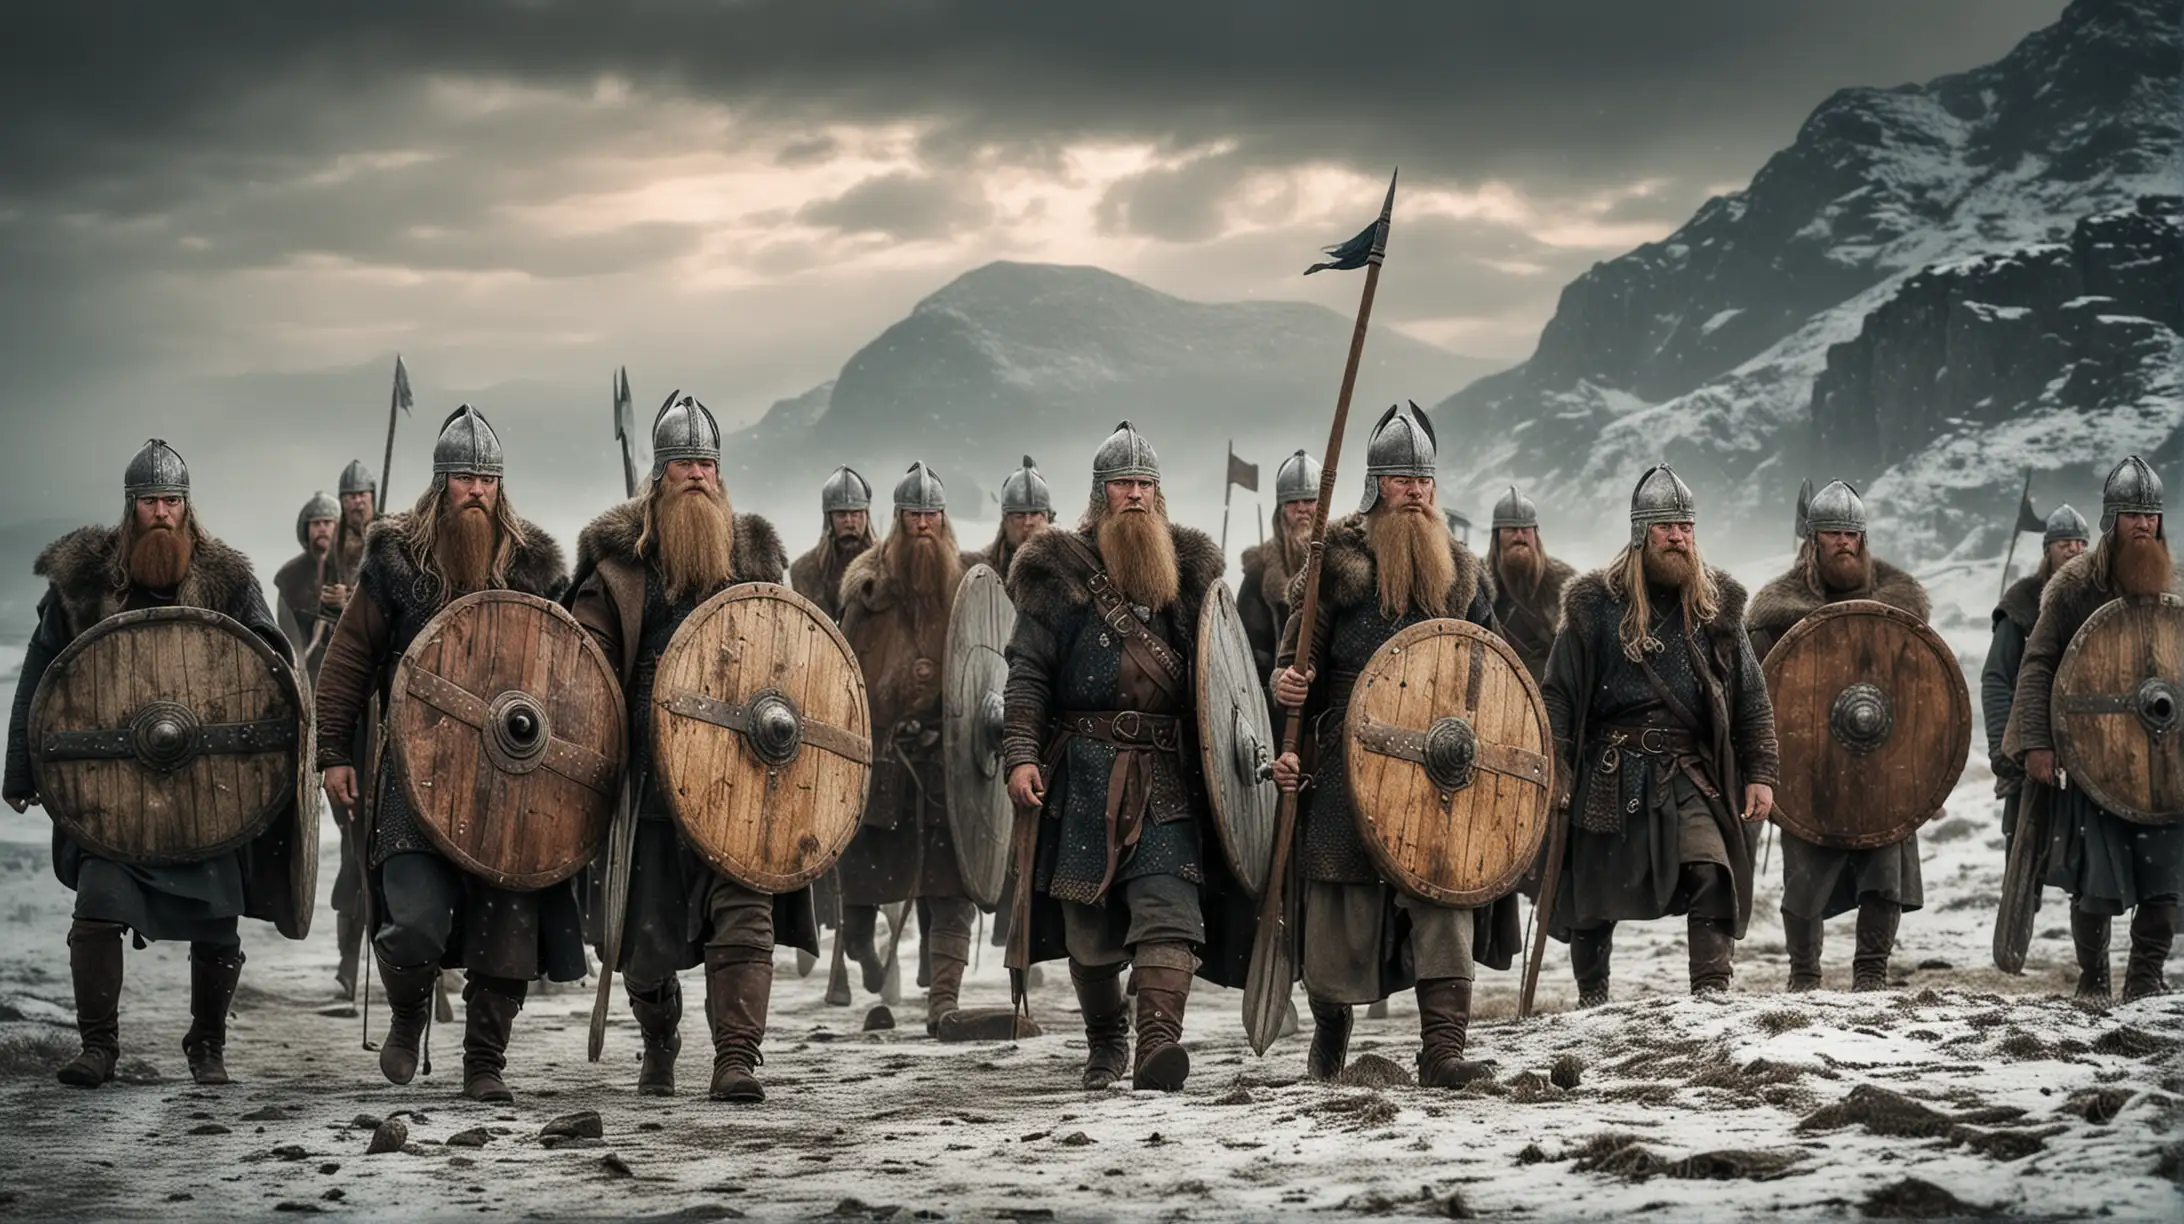 Mystical Scenes Ancient Vikings Exploring the Fjords